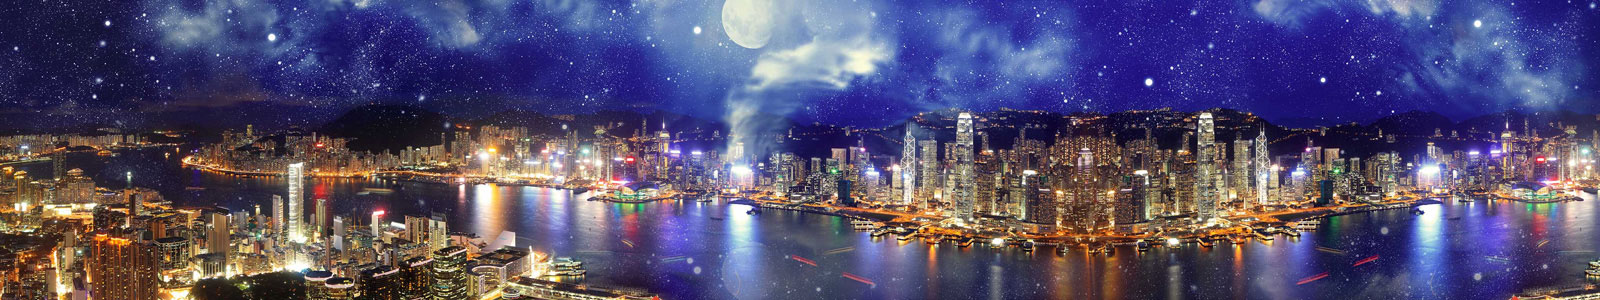 №5729 - Панорама ночного Гонконга